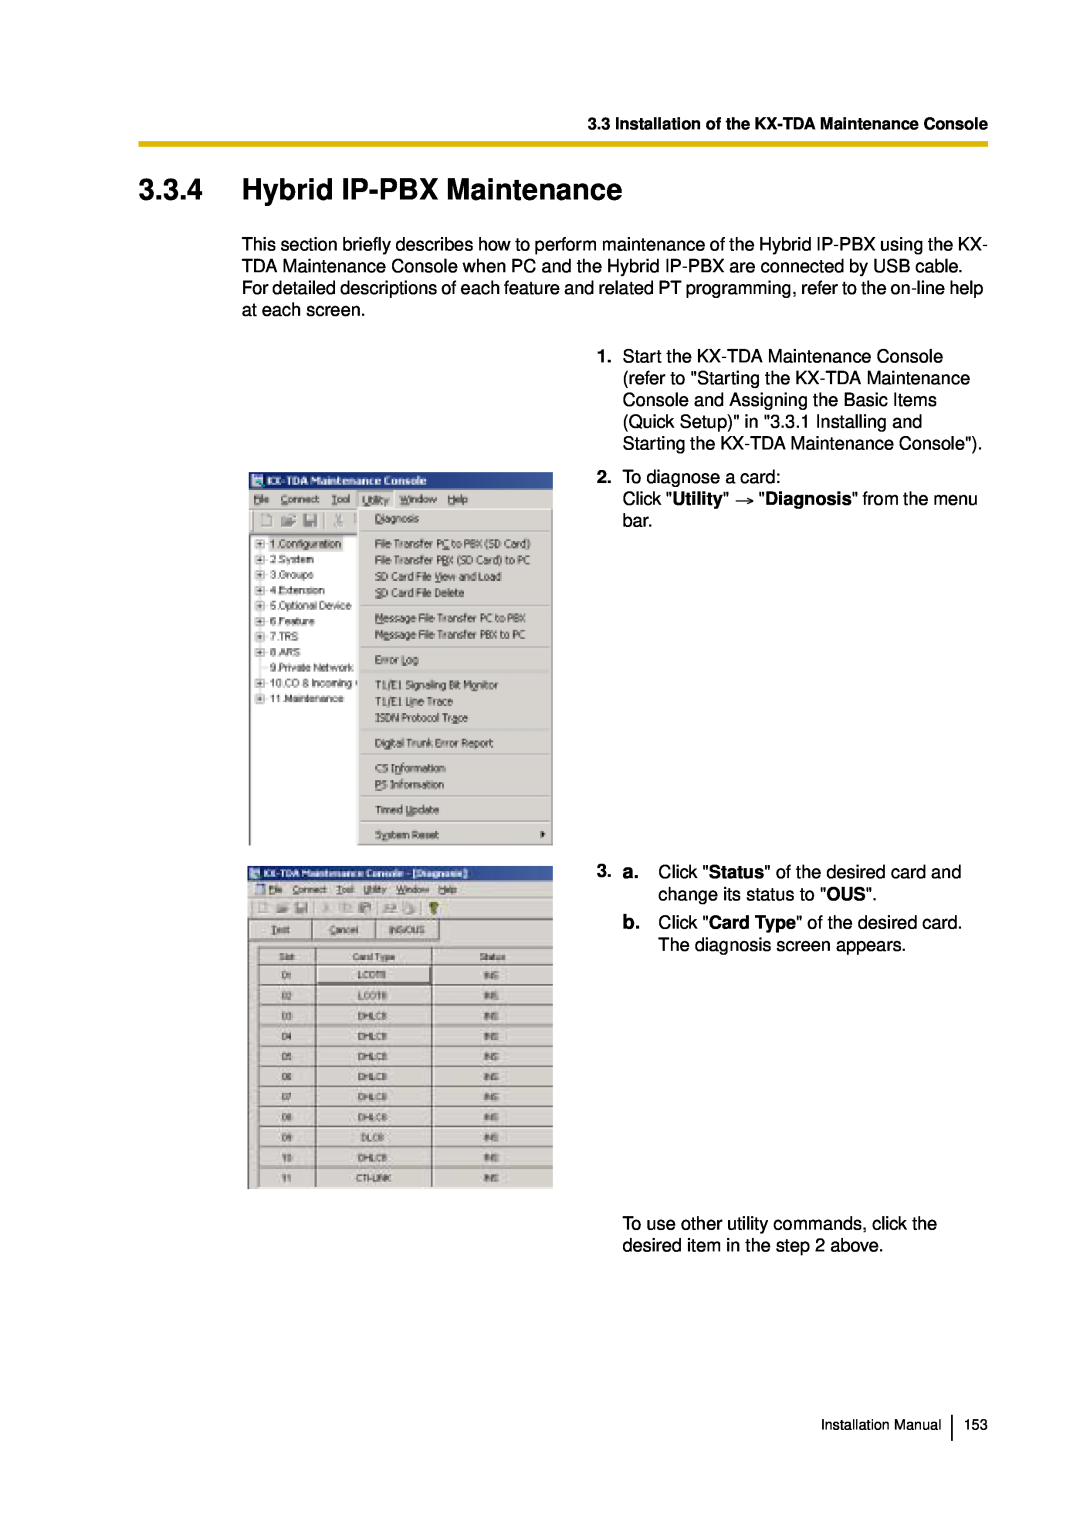 Panasonic KX-TDA30 installation manual 3.3.4Hybrid IP-PBXMaintenance 